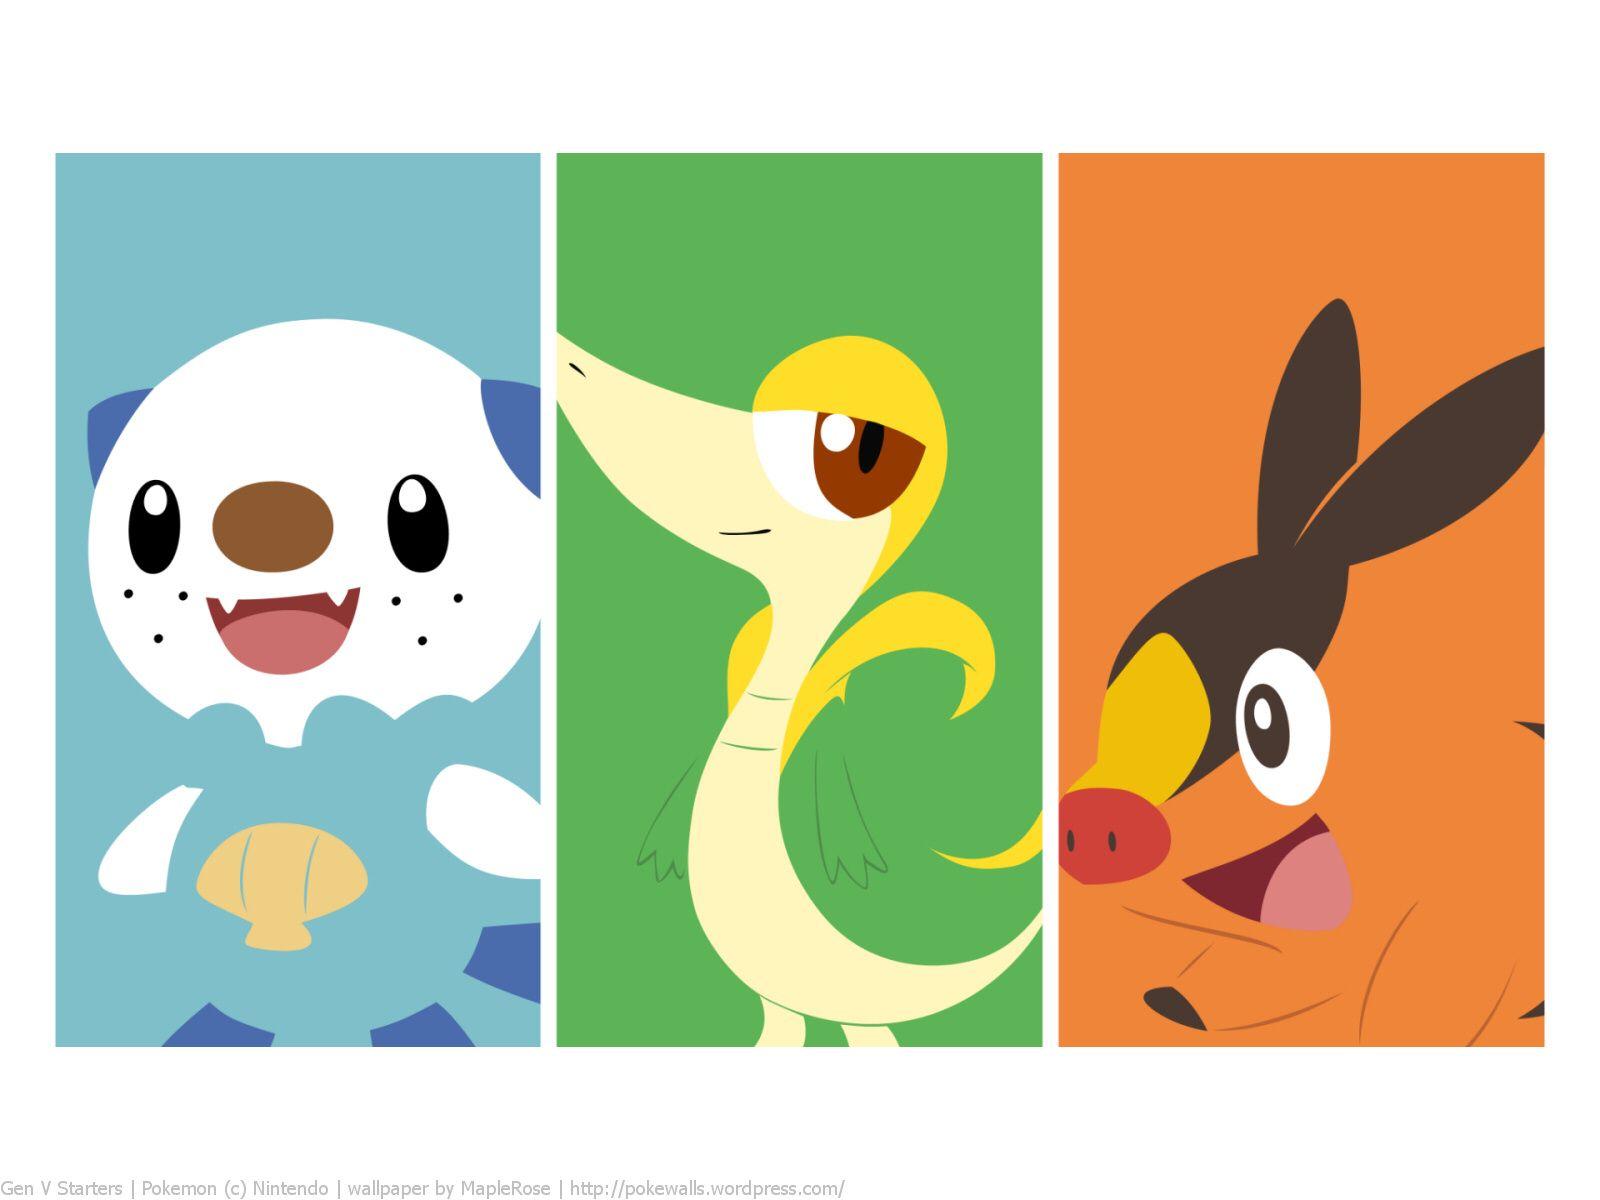 Pokemon gen 5 starters wallpaper. #snivy #tepig #oshawott. Pokémon